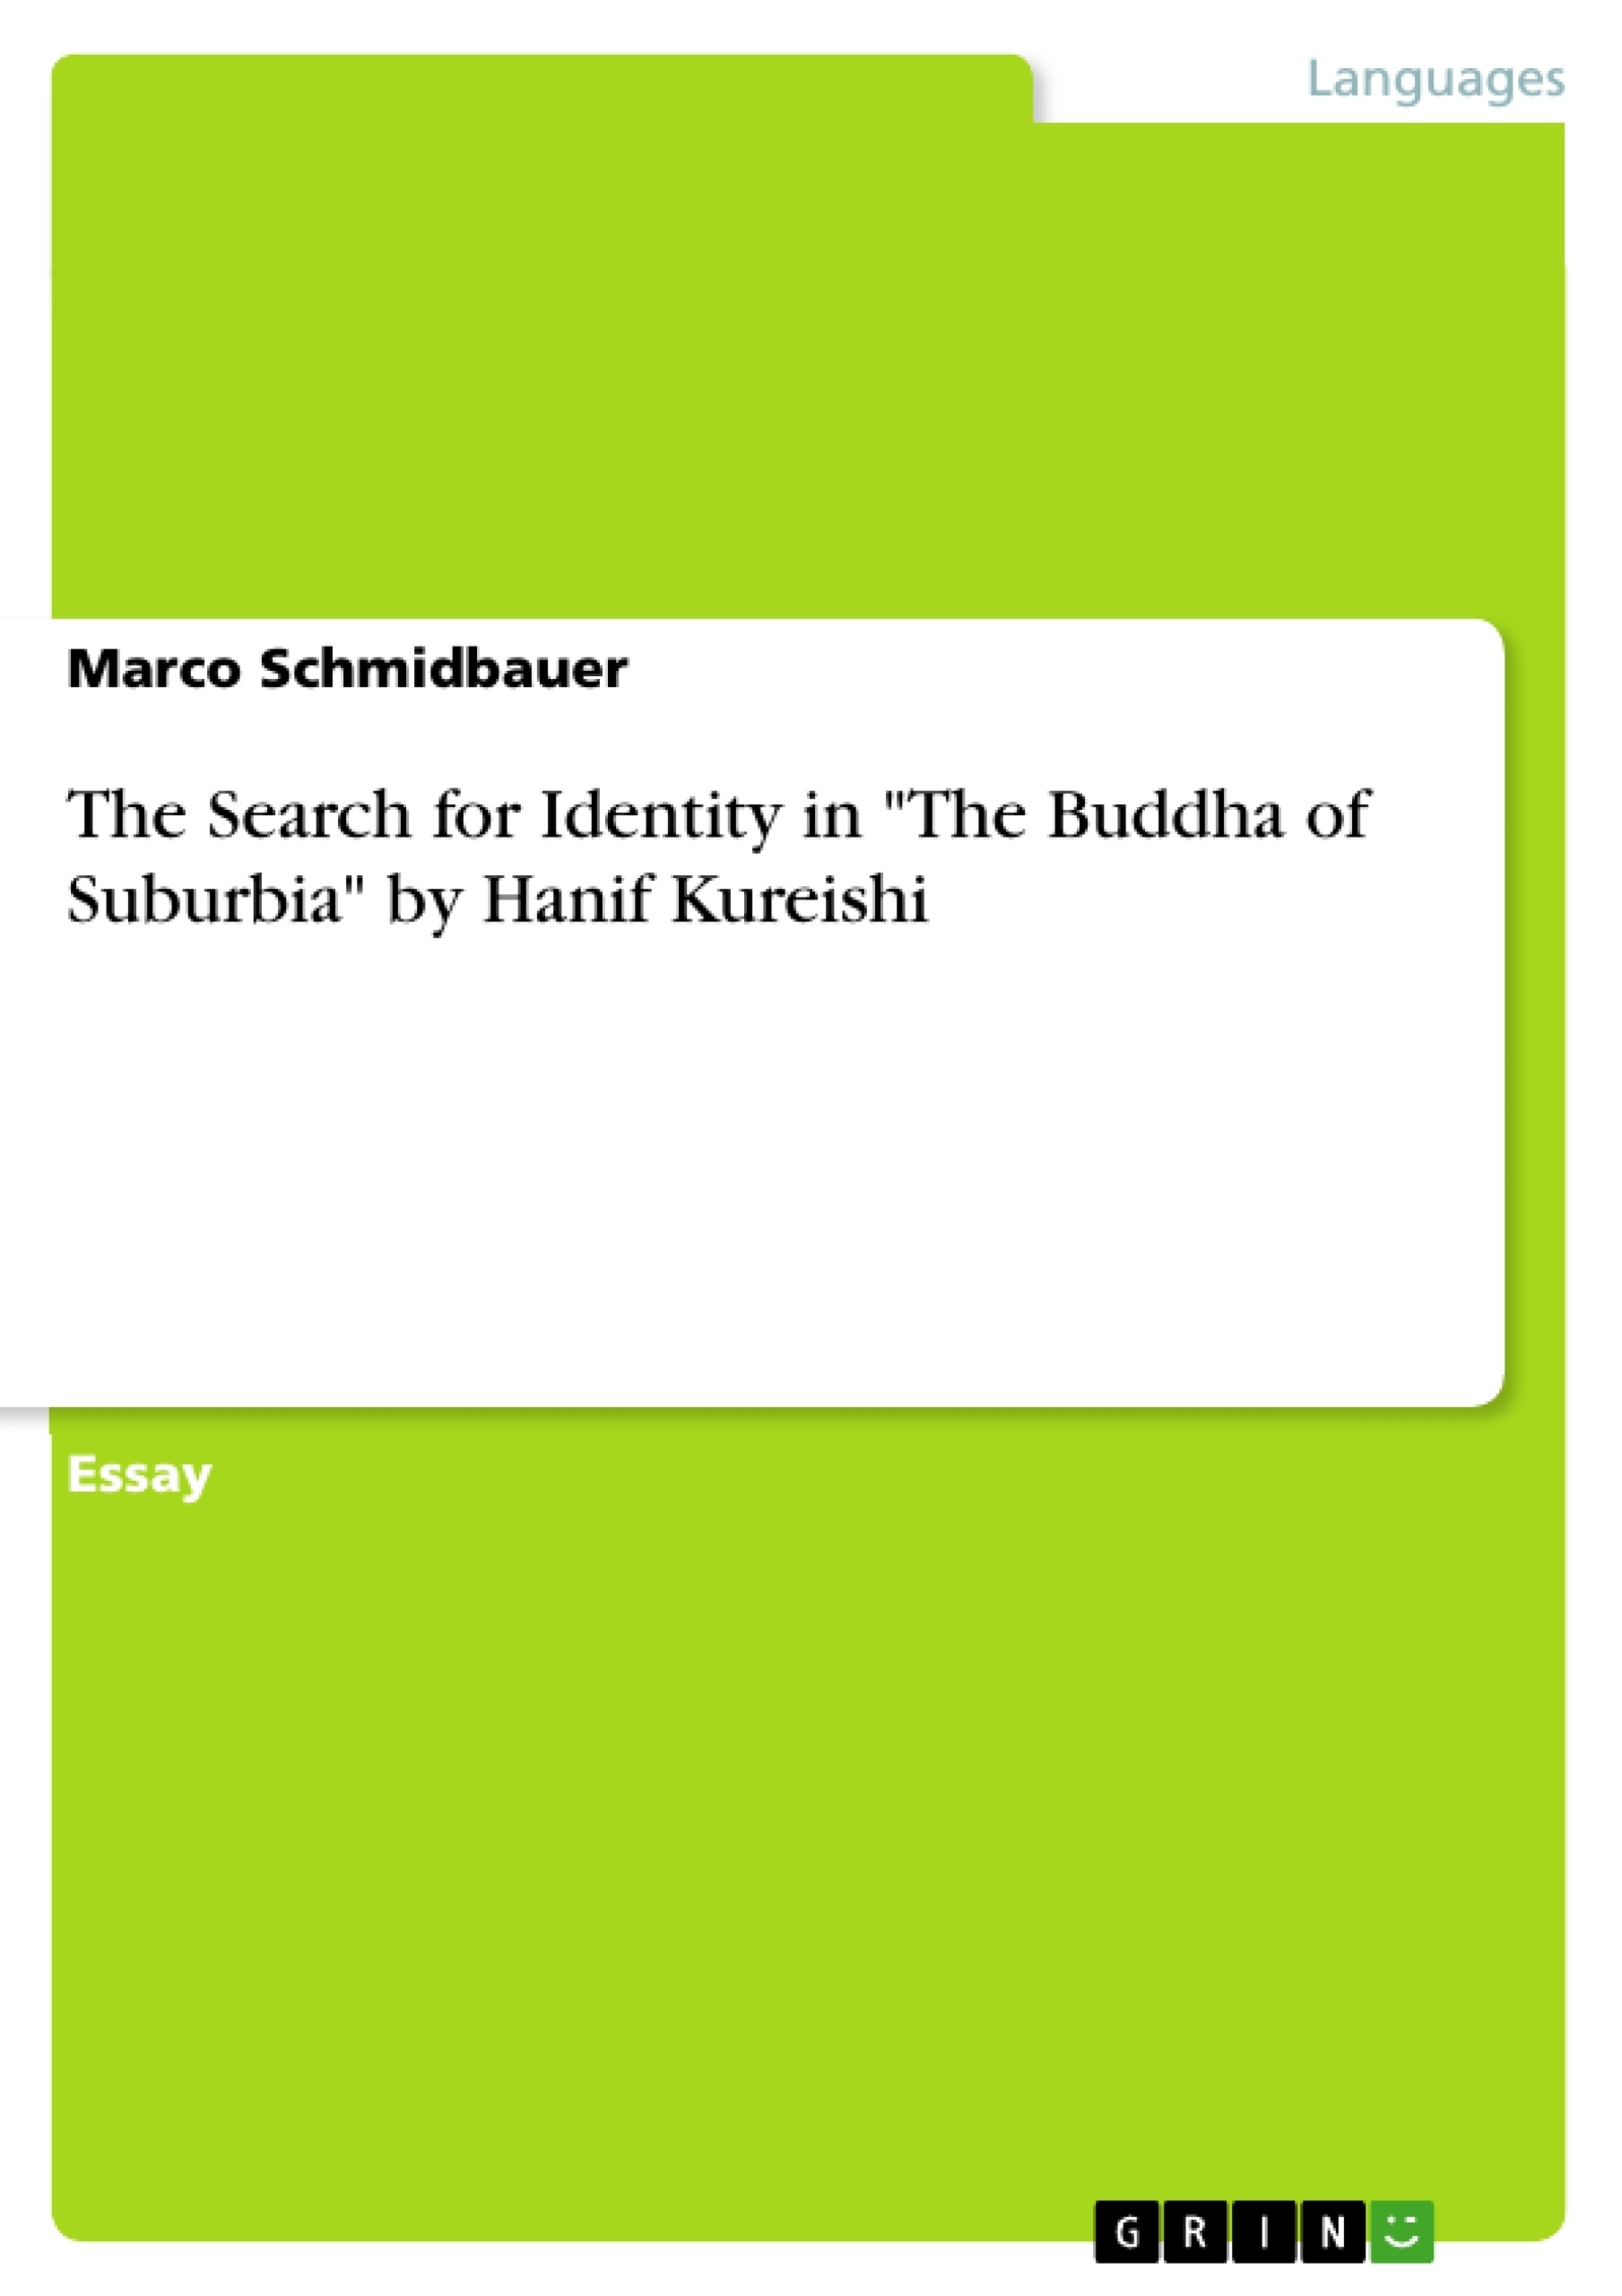 the buddha of suburbia characters